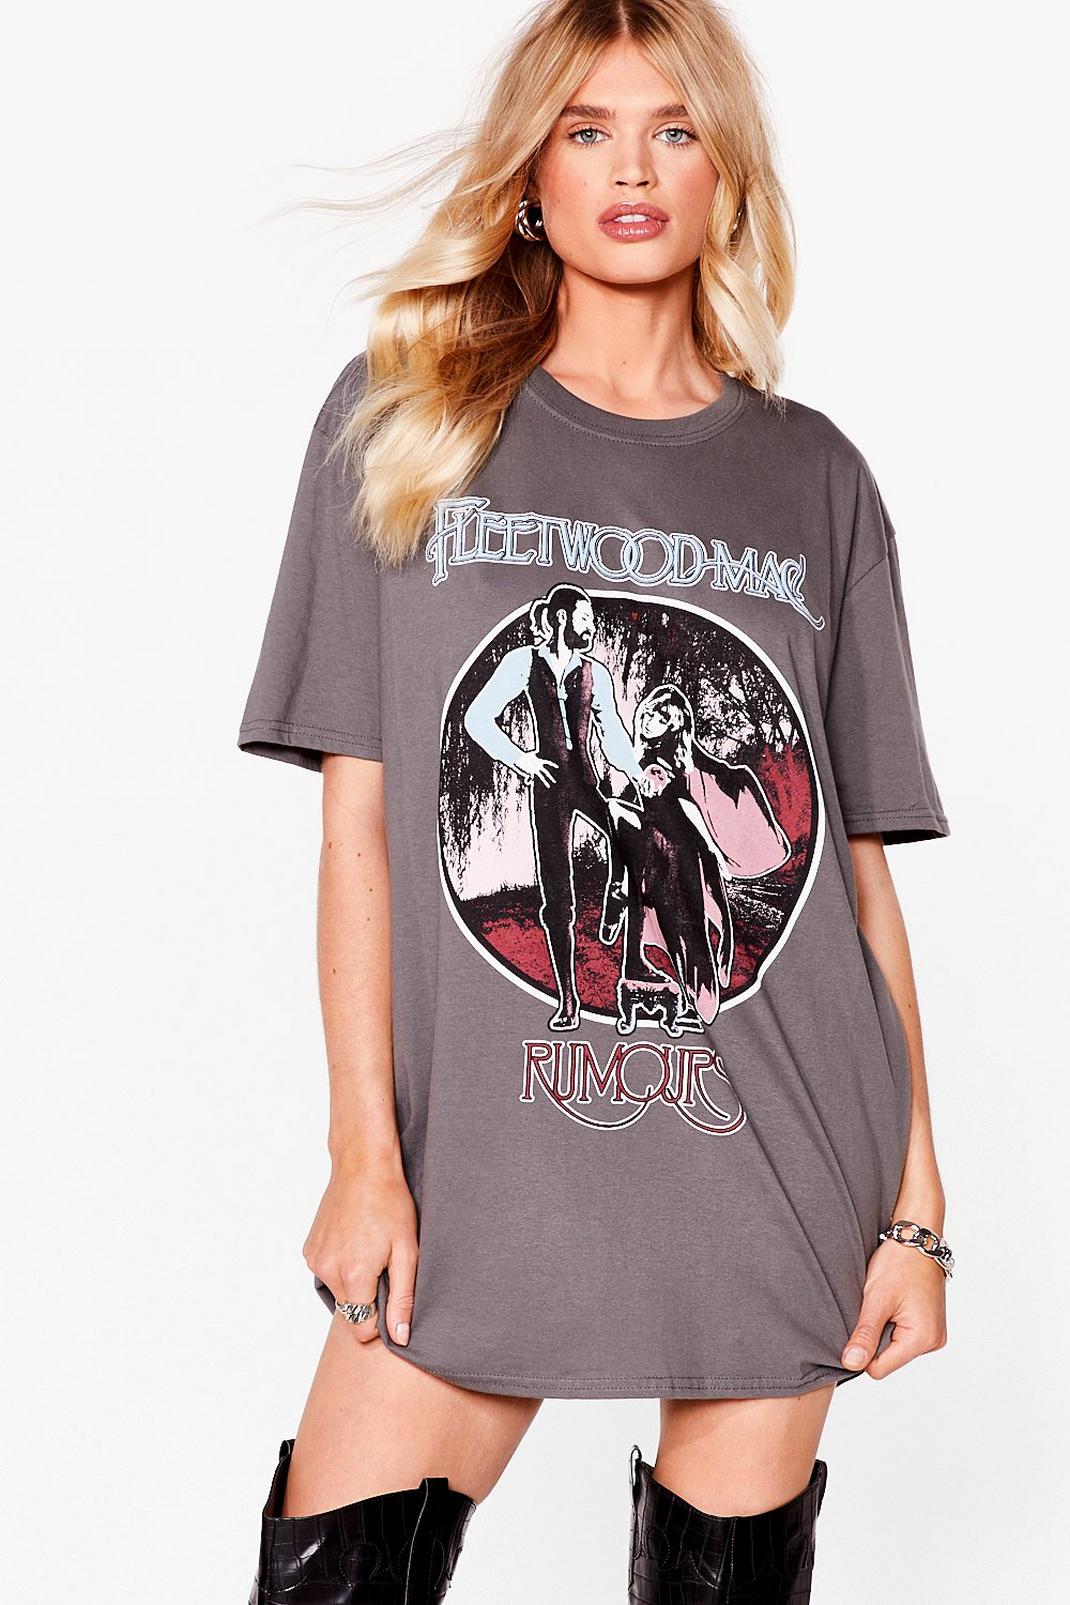 Black Fleetwood Mac Vintage T-Shirt Dress image number 1